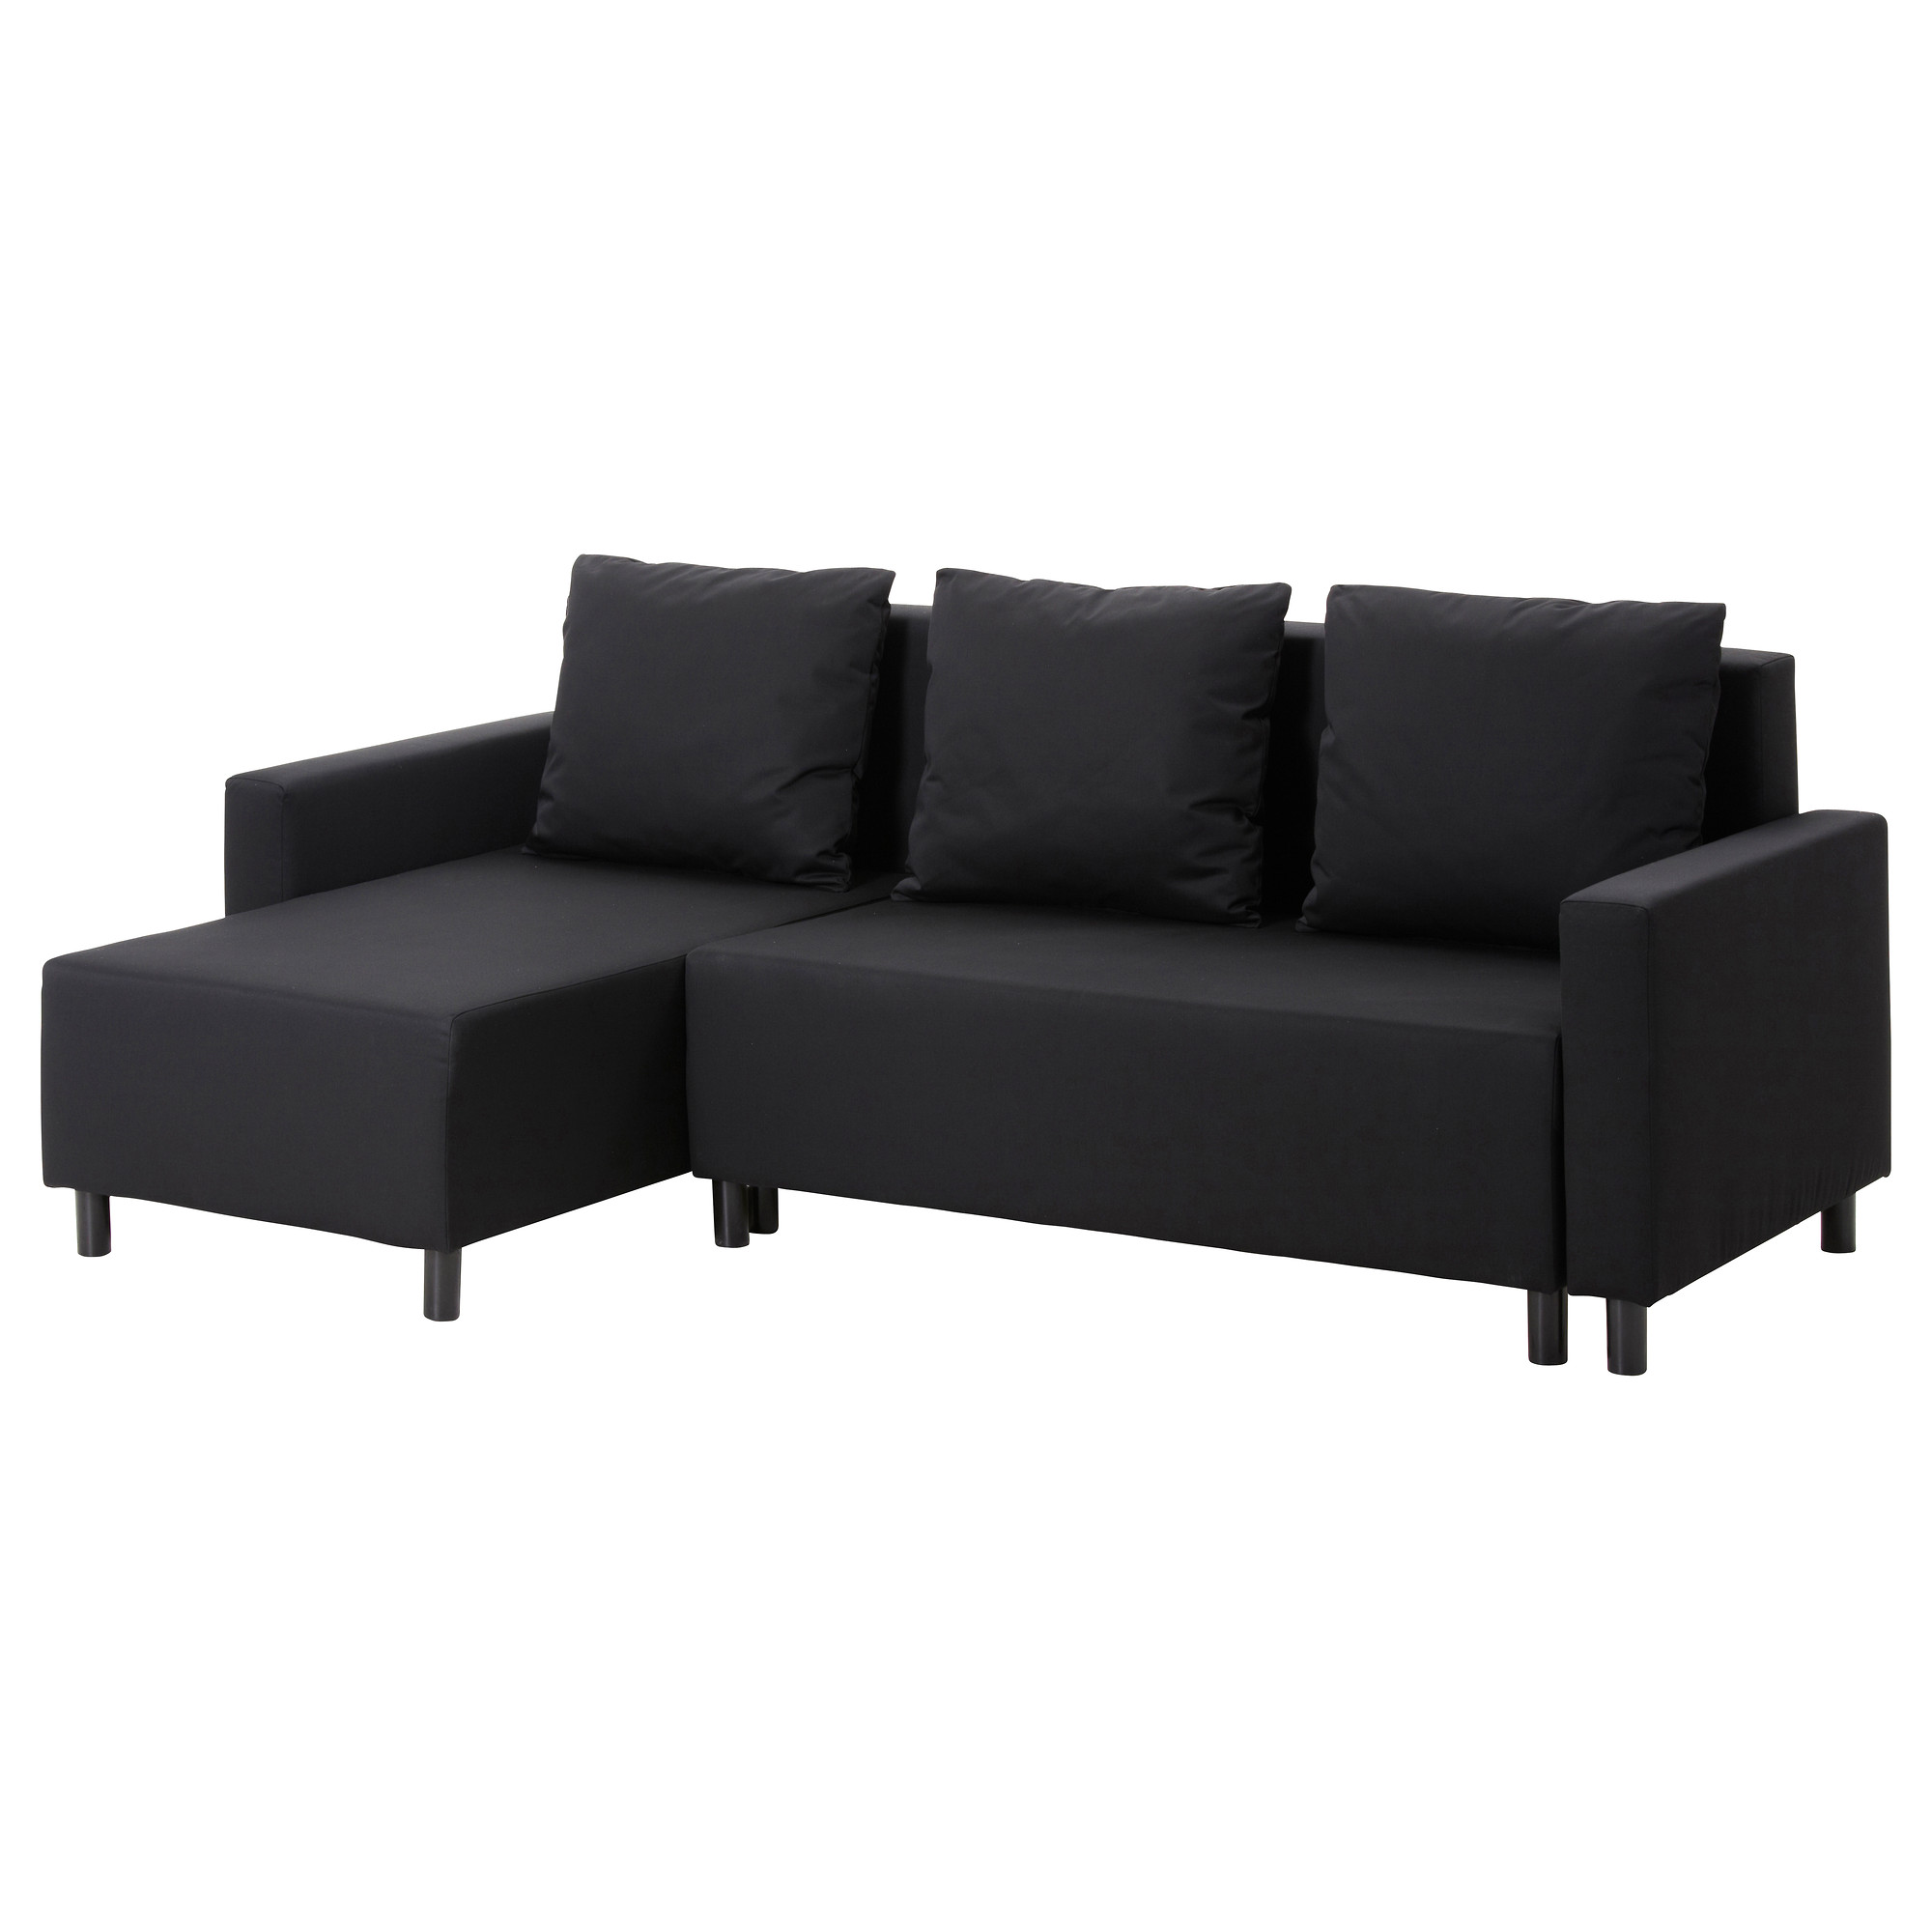 Popular LUGNVIK sleeper sectional, 3-seat, Granån black Width: 87 3/4 sofa bed with storage